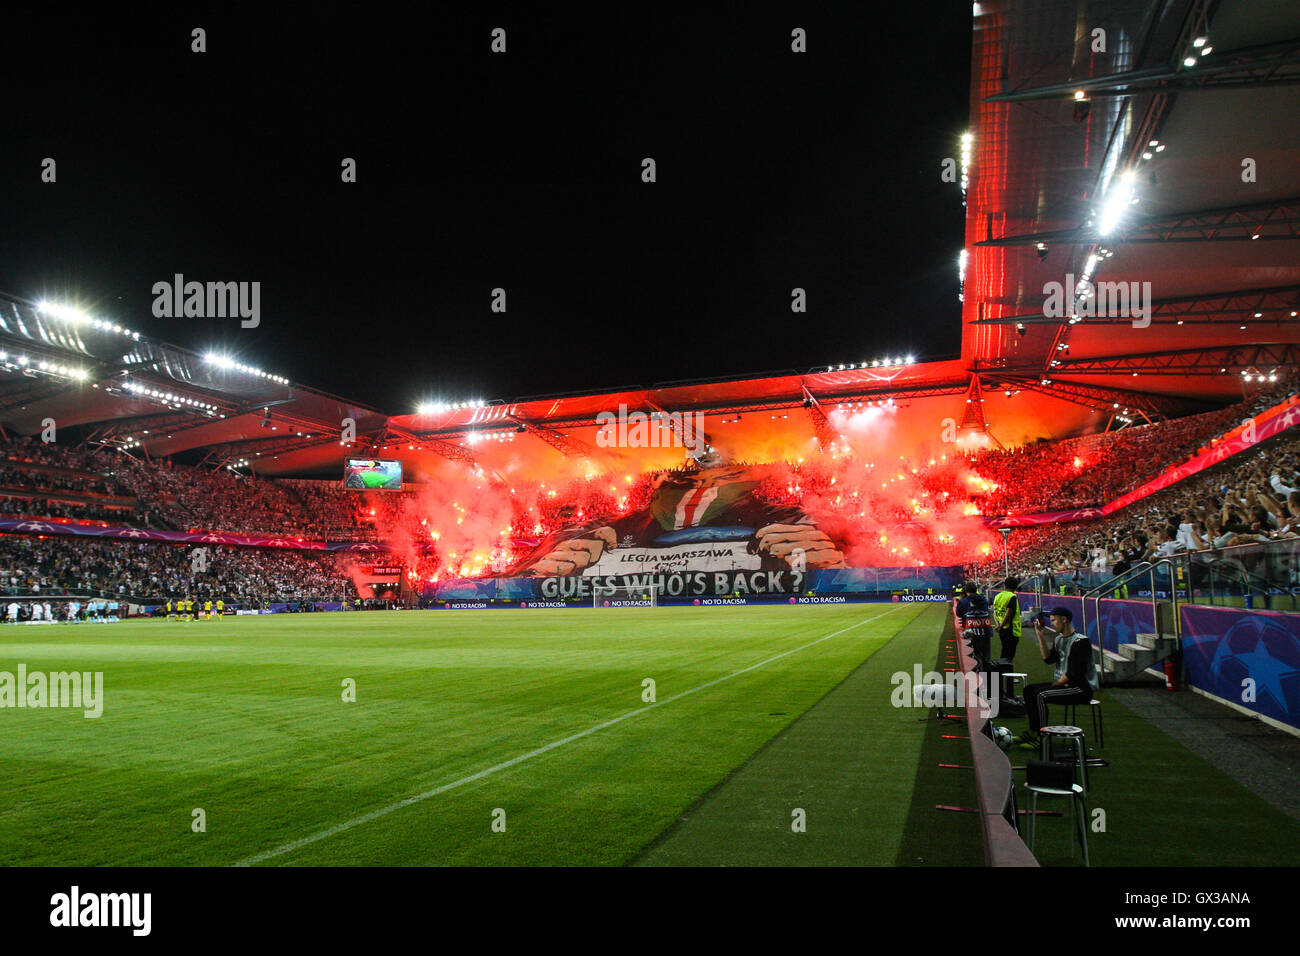 Mediator Optimisme Egnet Dortmund Stadium High Resolution Stock Photography and Images - Alamy